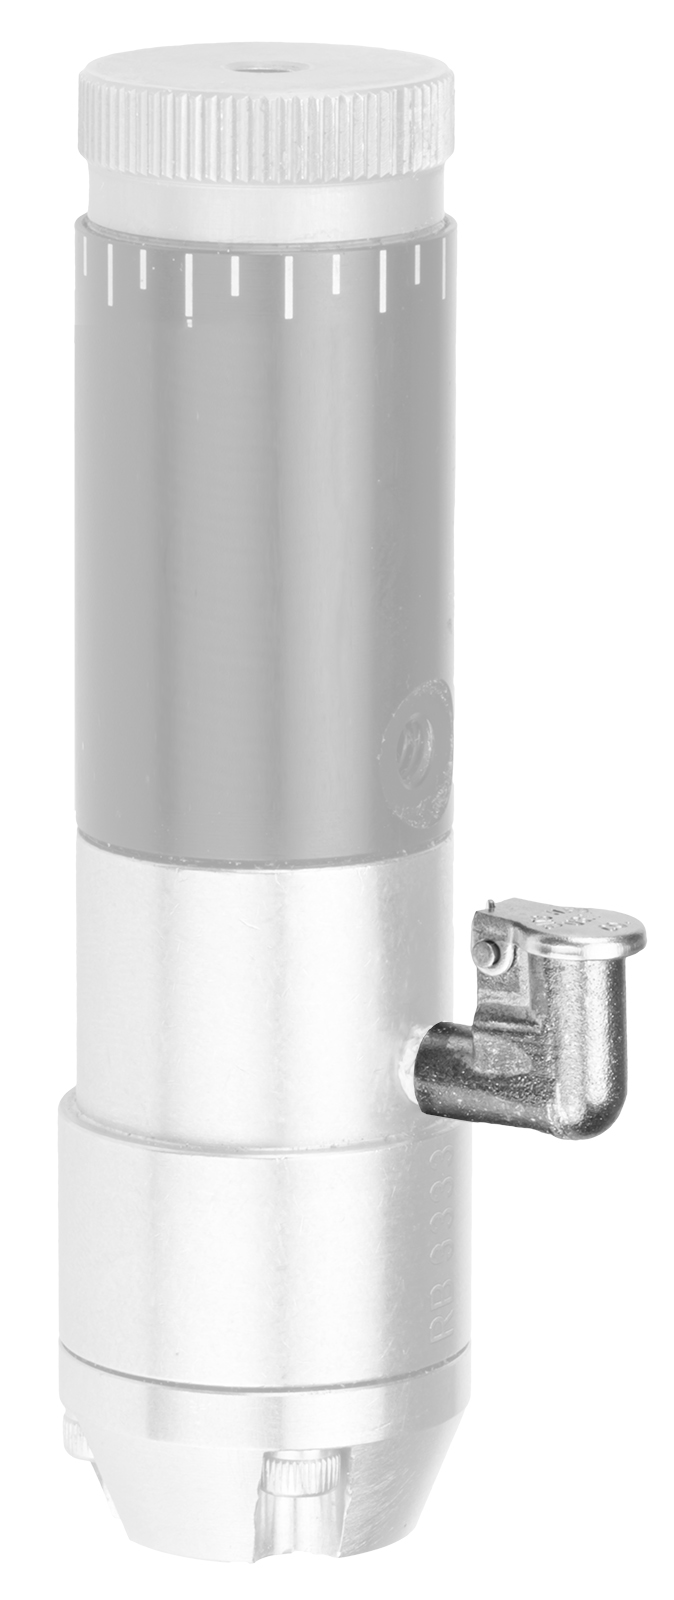 Oiler for Mini Spool valve DV-5325 series. Thread M5